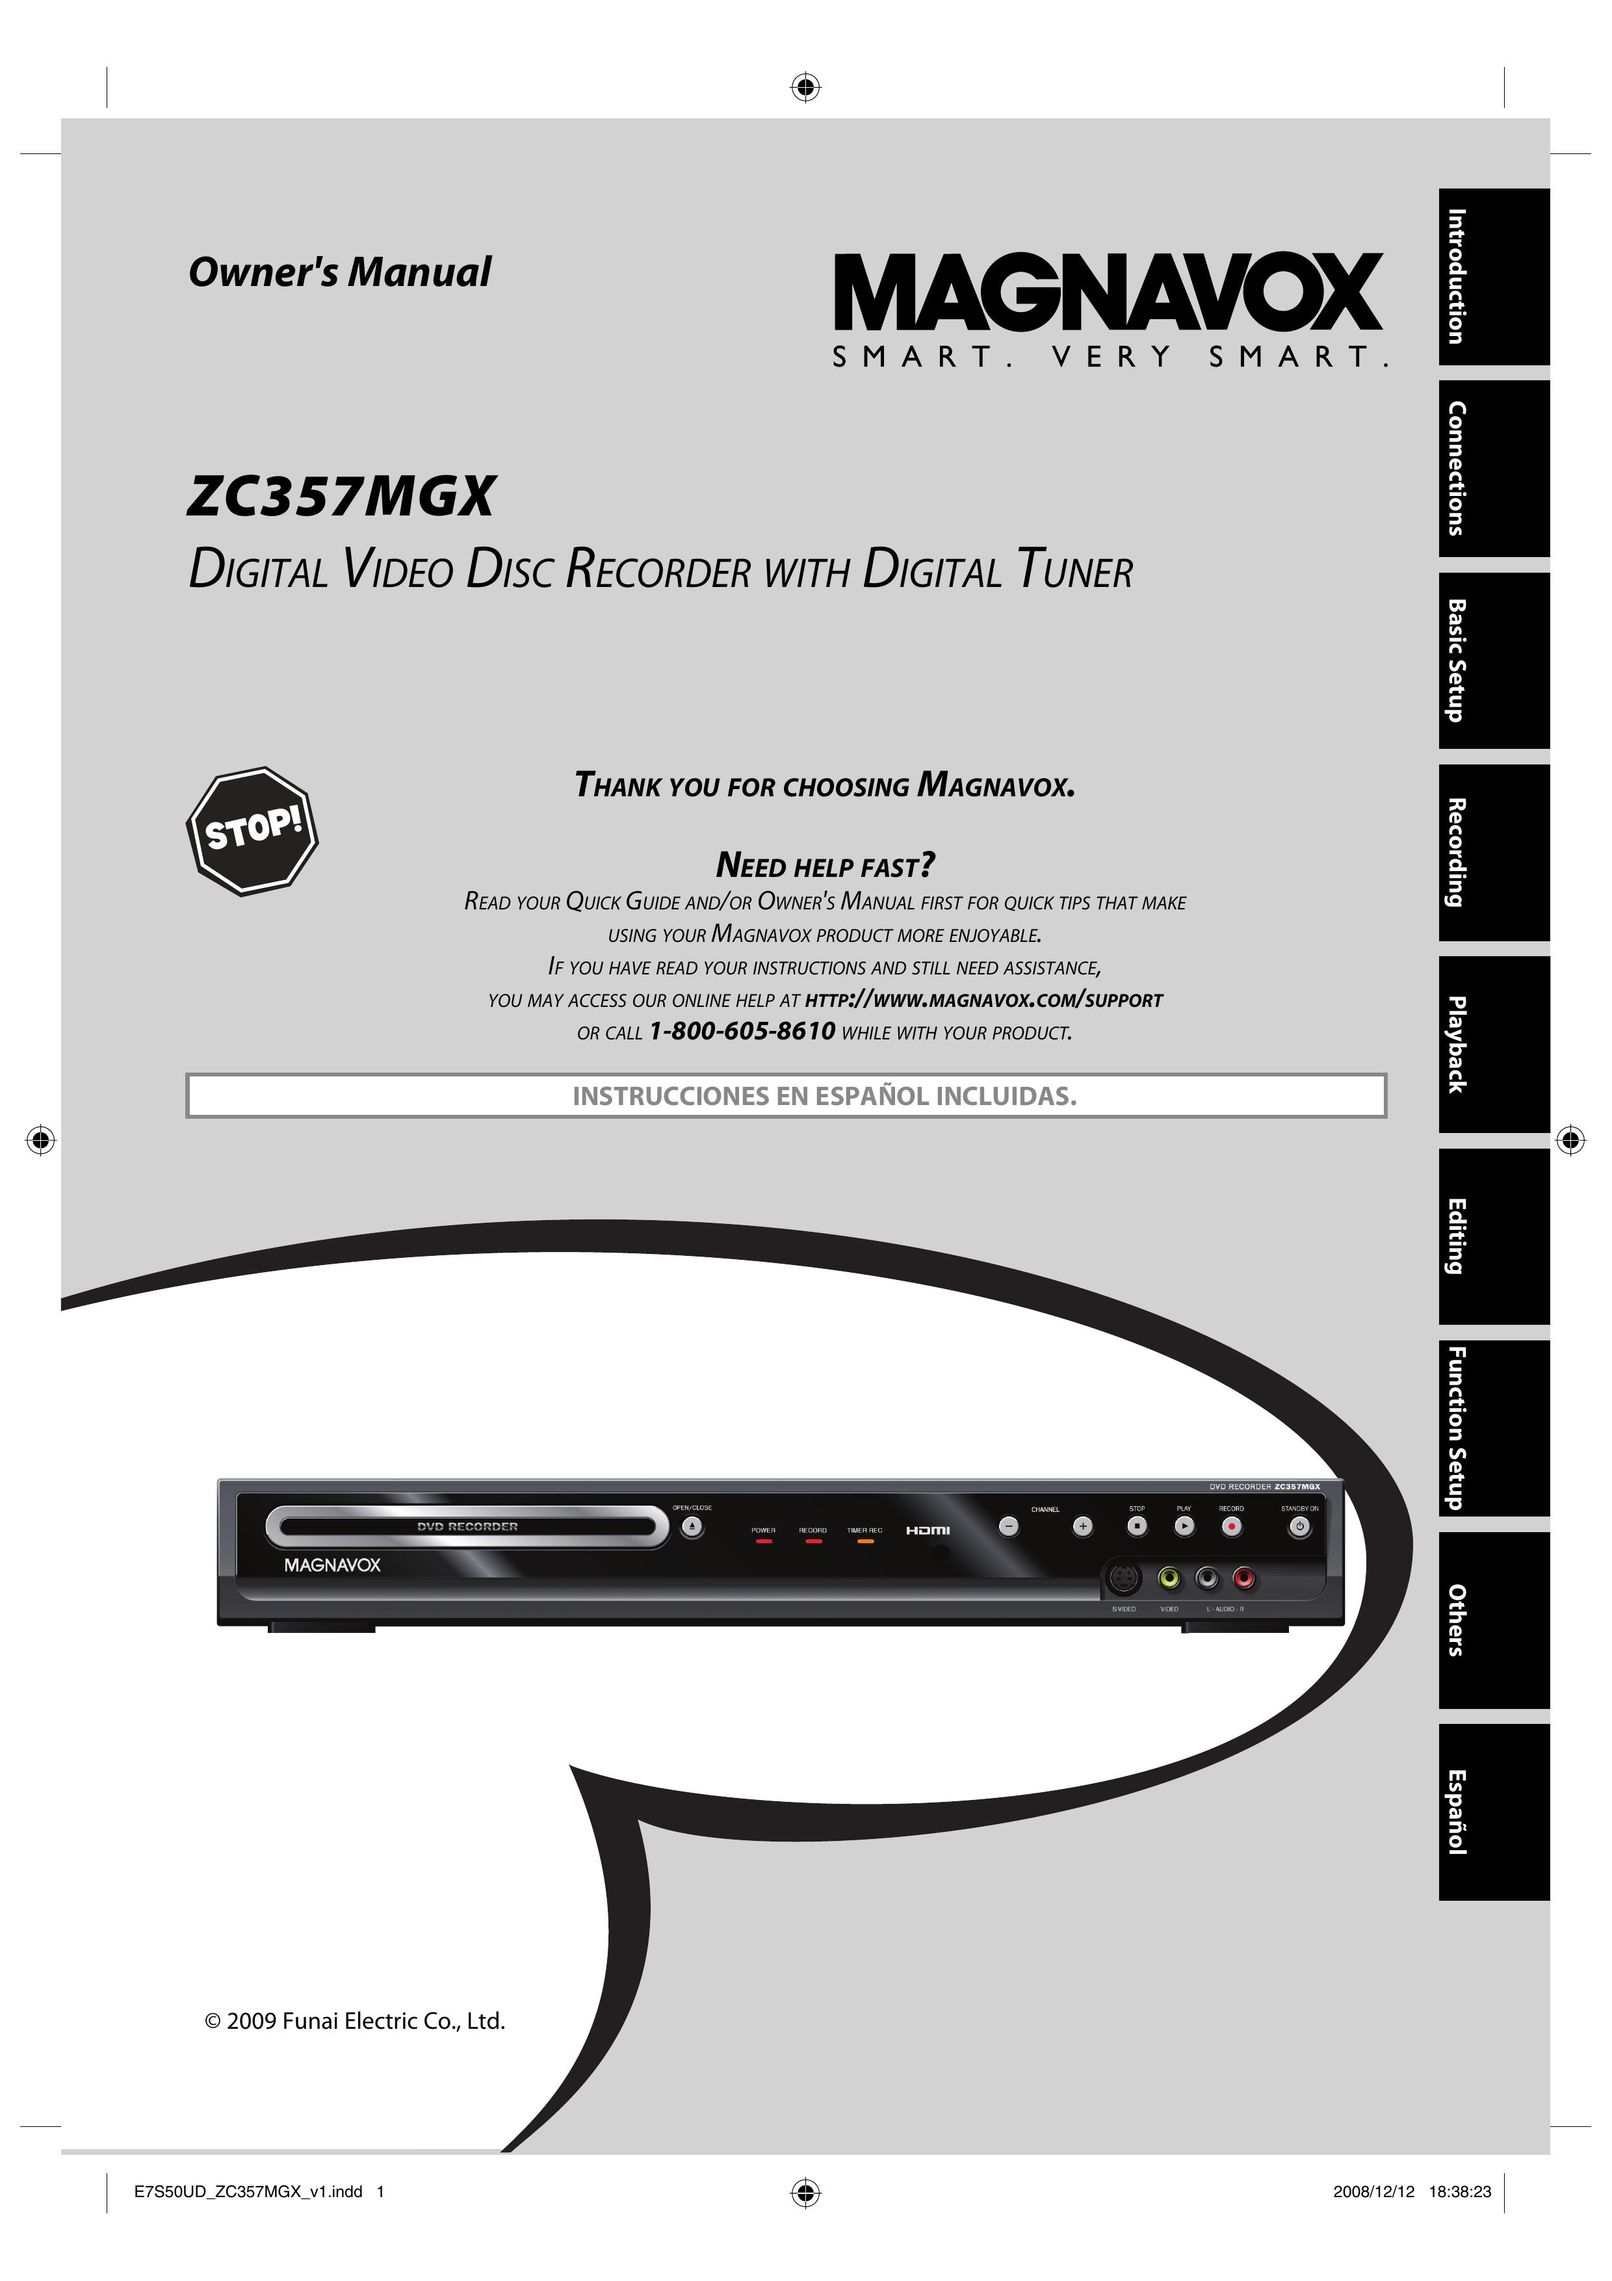 Magnavox ZC357MGX DVR User Manual